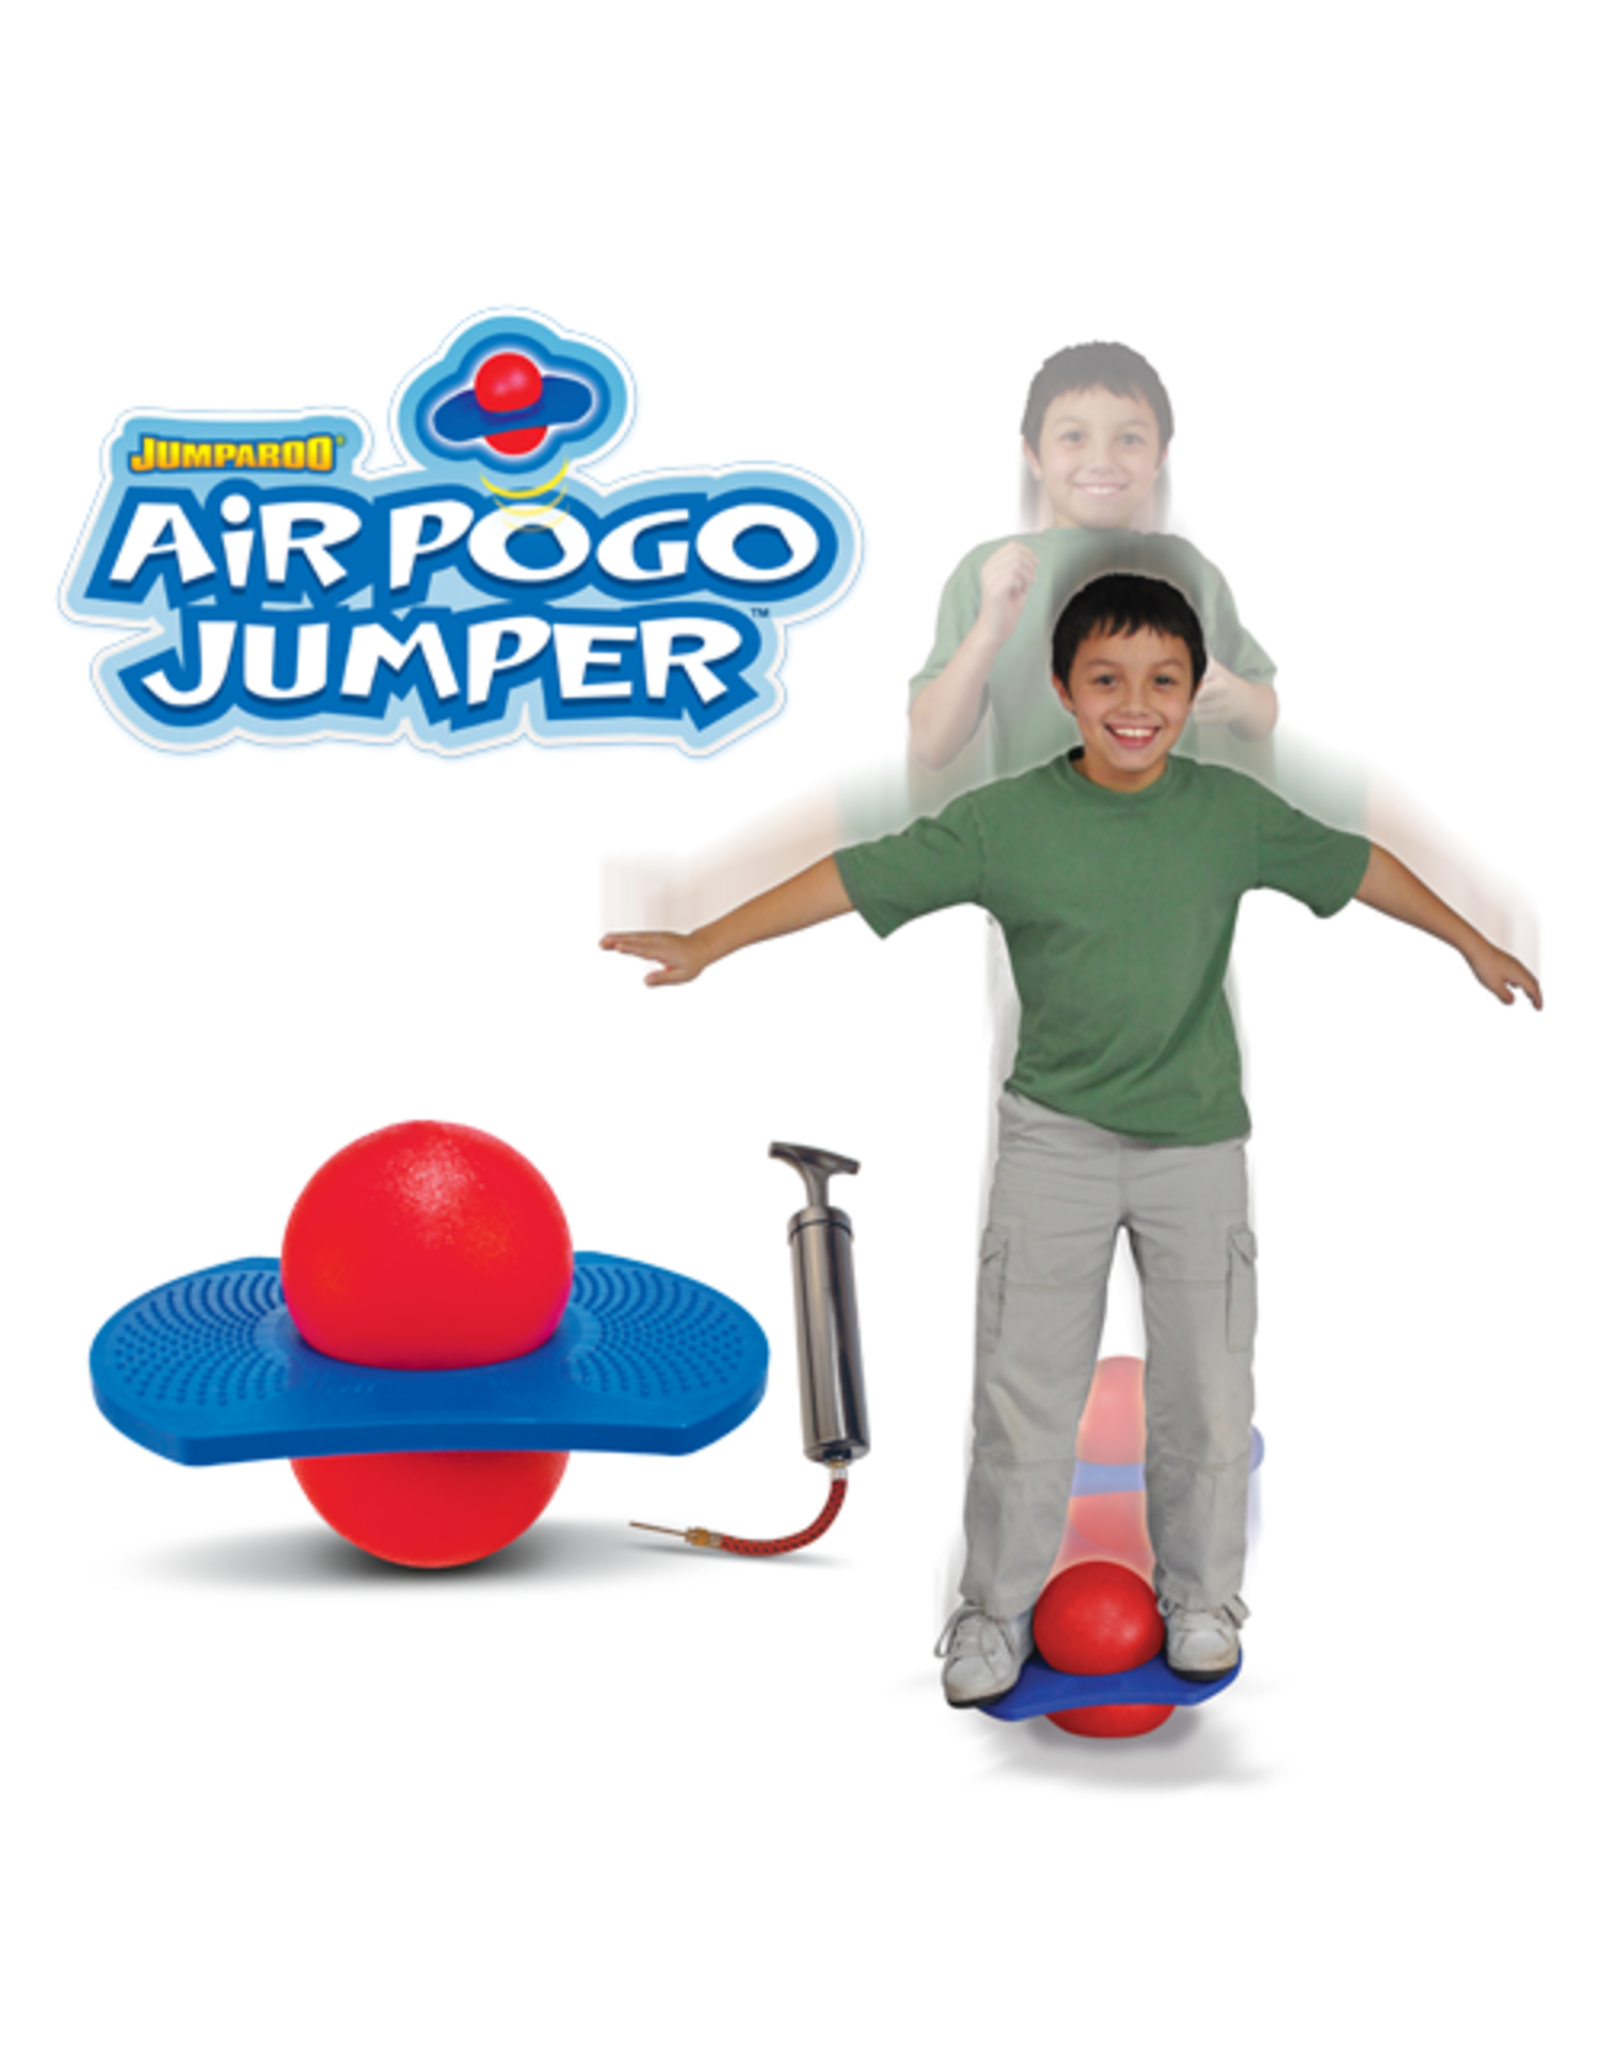 Джампер бот. Джамперы Air Kicks. Бобби Джампер. Pogo Jump. Air Pogo Jamper.